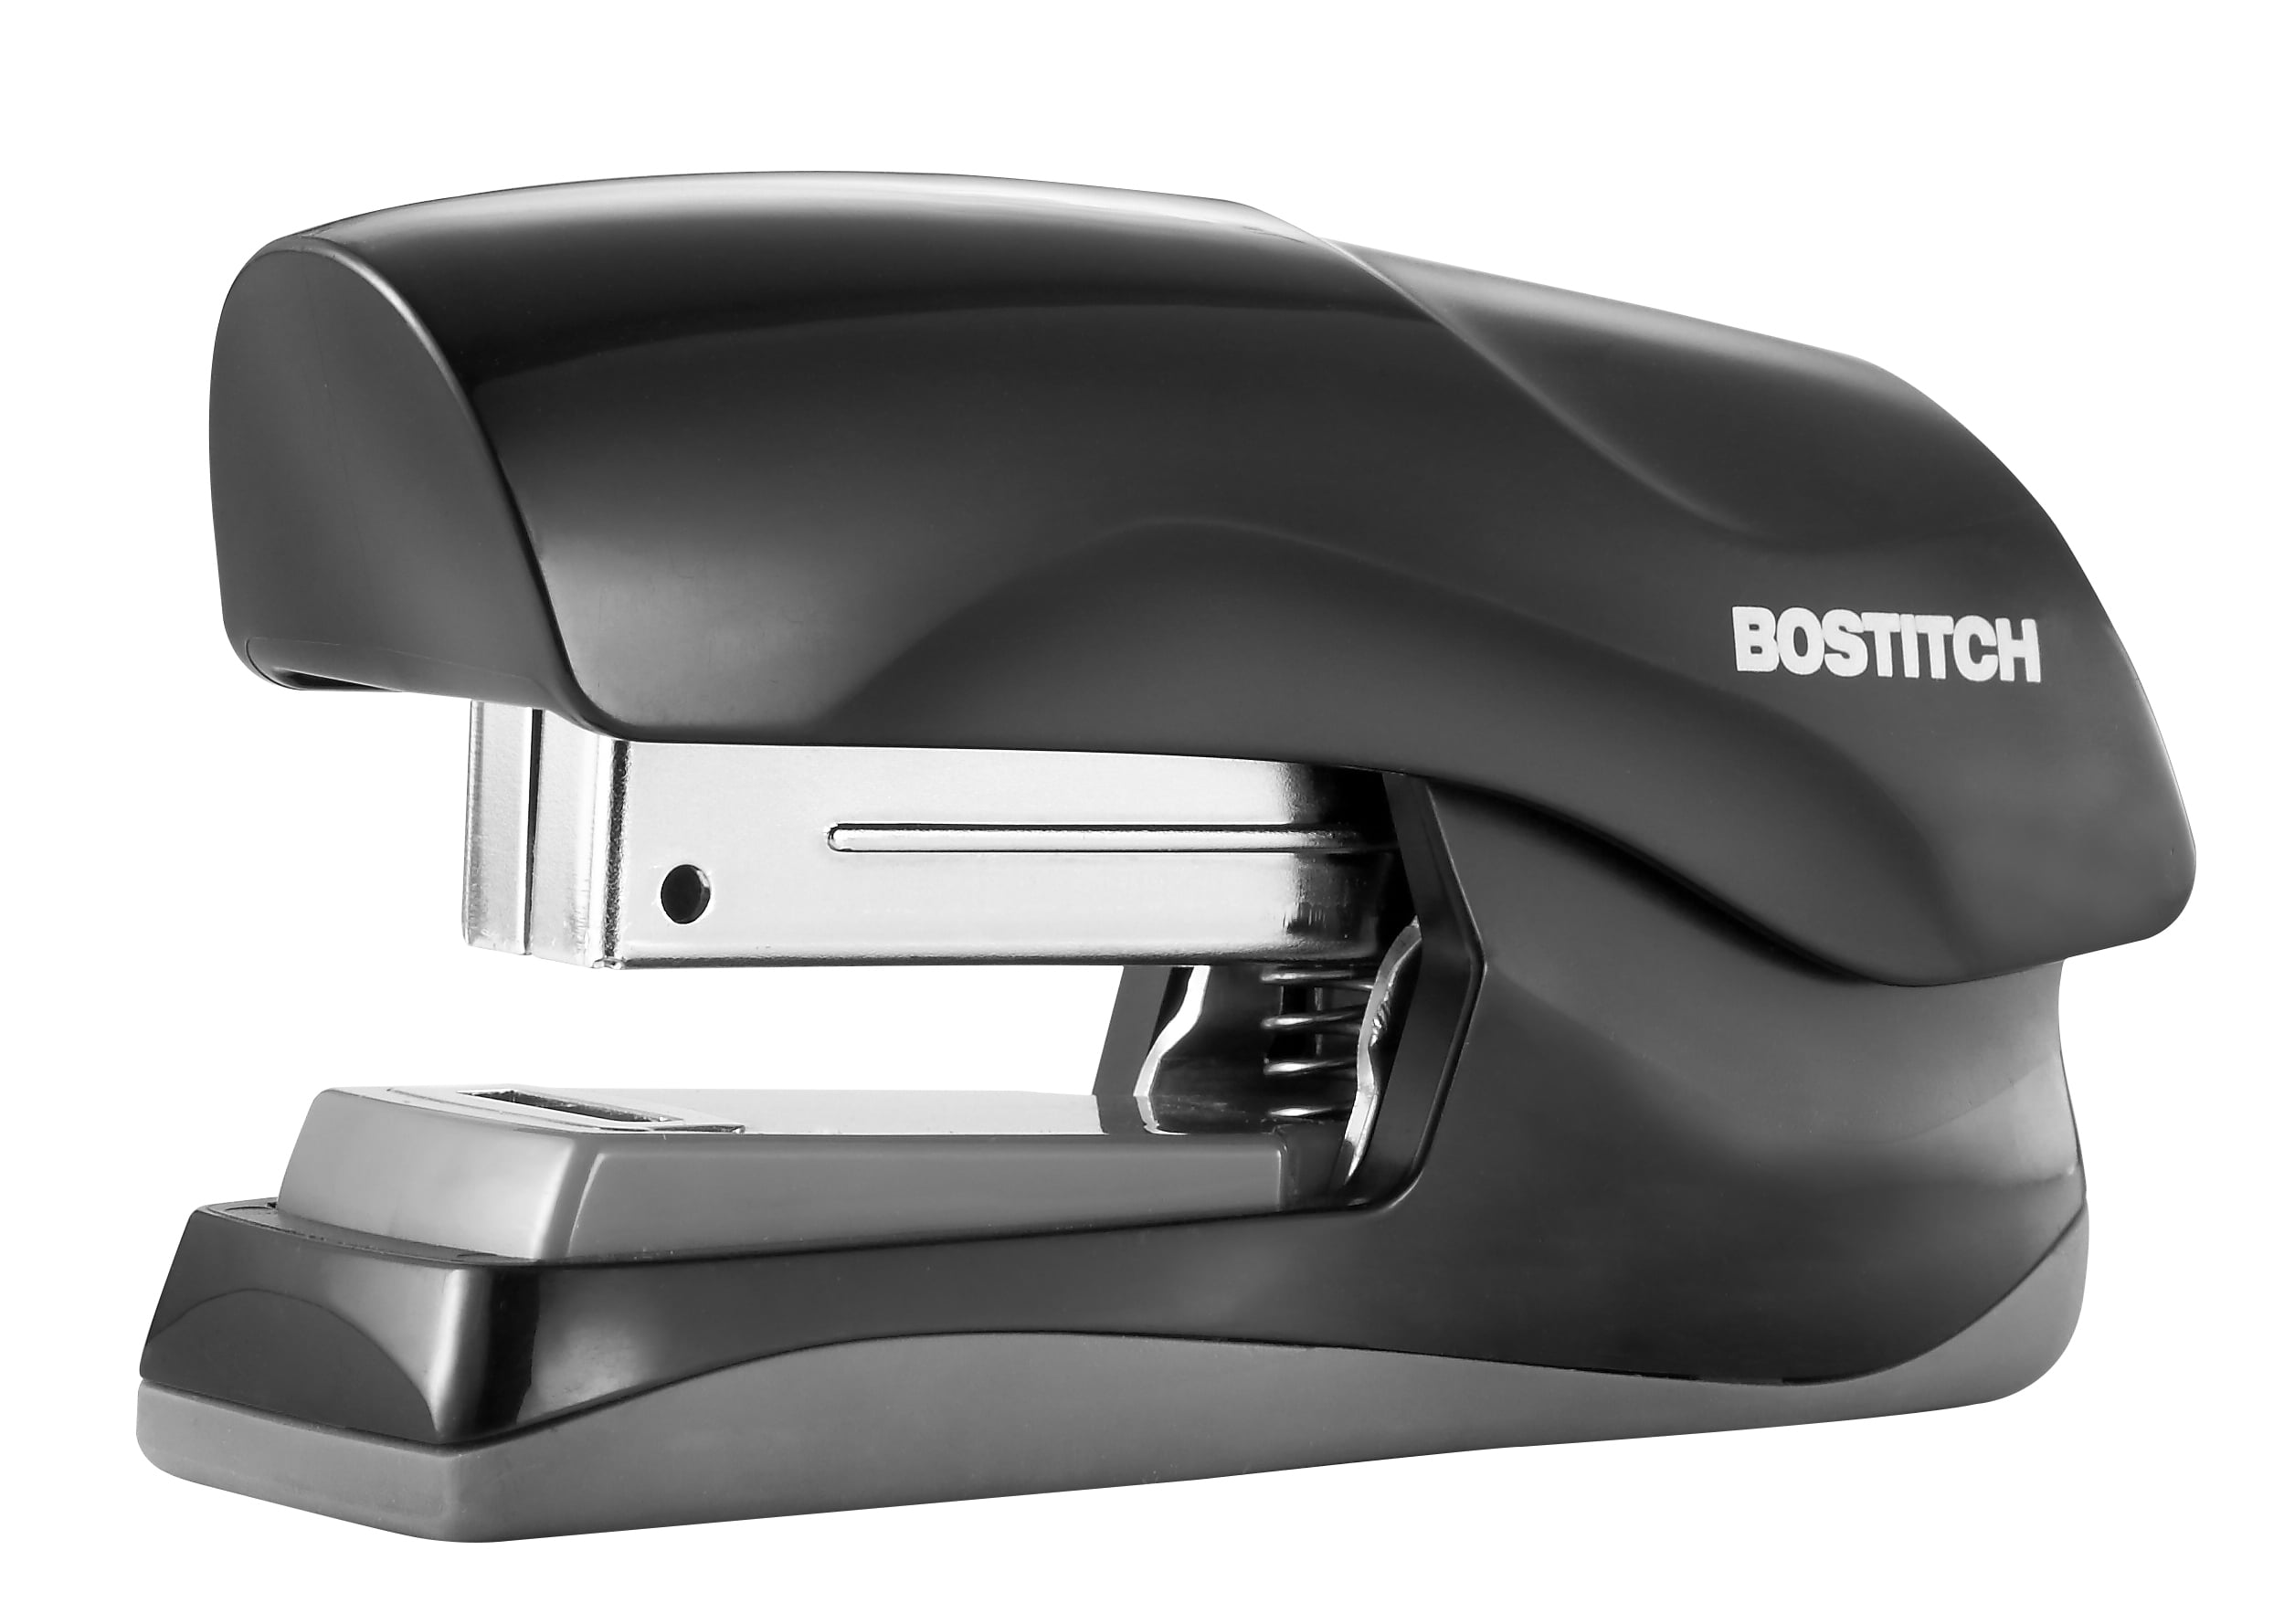 Bostitch Office Heavy Duty Stapler, 40 Sheet Capacity, No Jam, Half Strip,  For Classroom, Office or Desk, Black